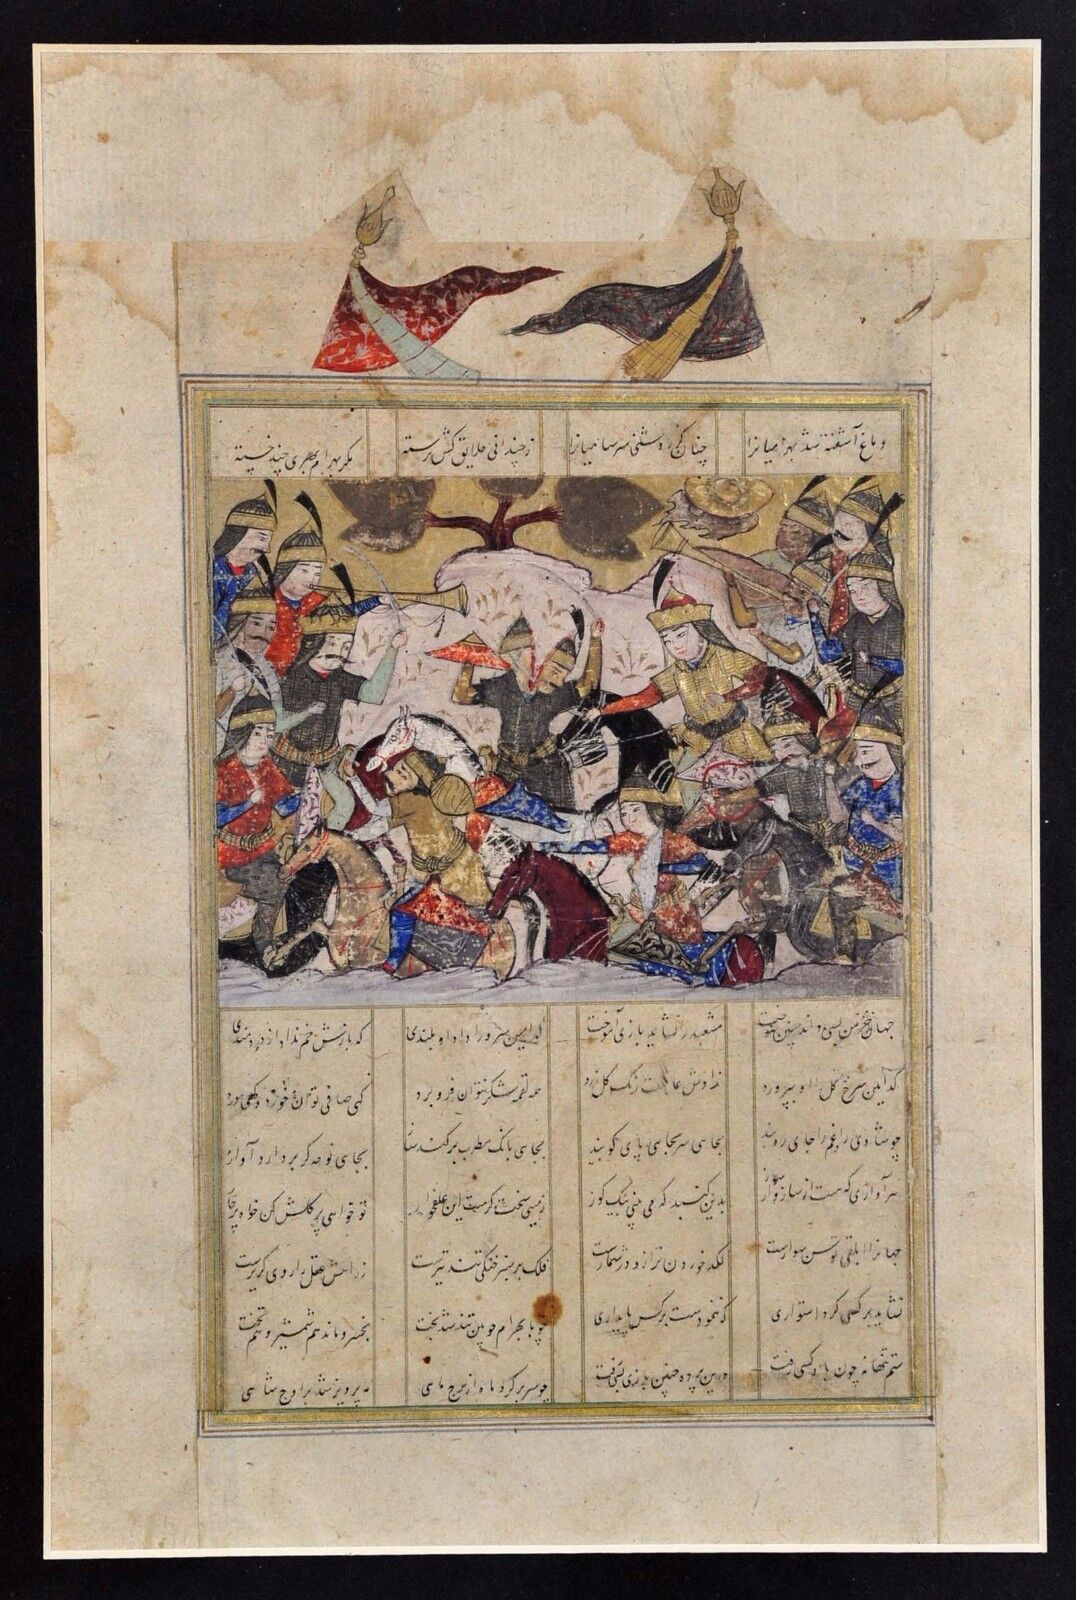 ANTIQUE SAFAVID SHAHNAMEH ISLAMIC PERSIAN MINIATURE PAINTING MANUSCRIPT 1600 AD